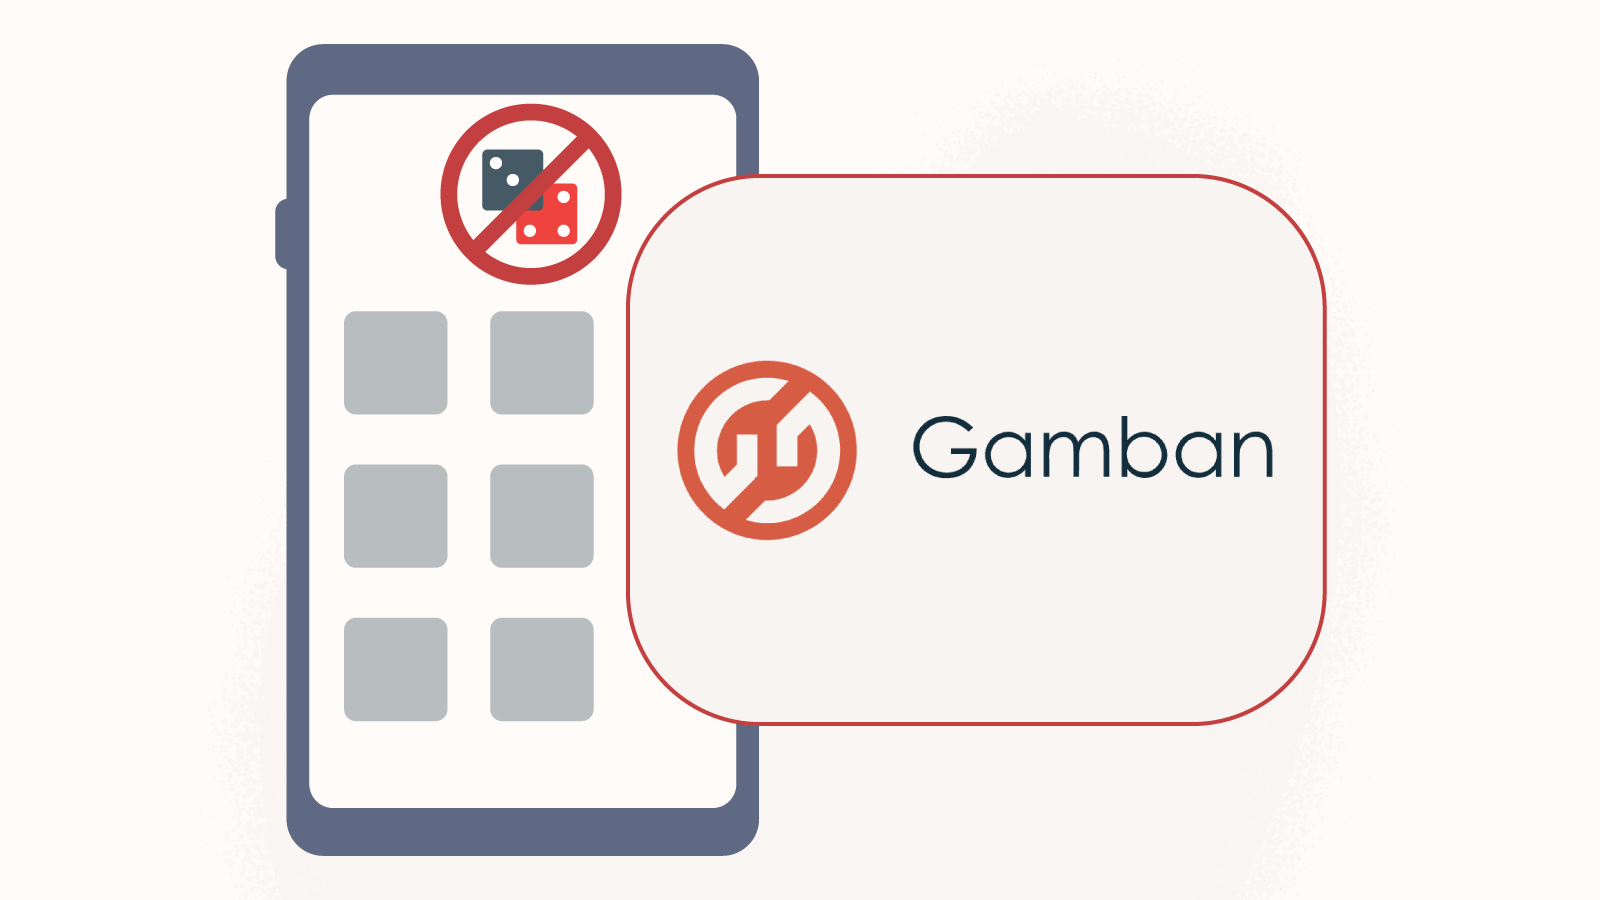 What is the purpose of GamBan